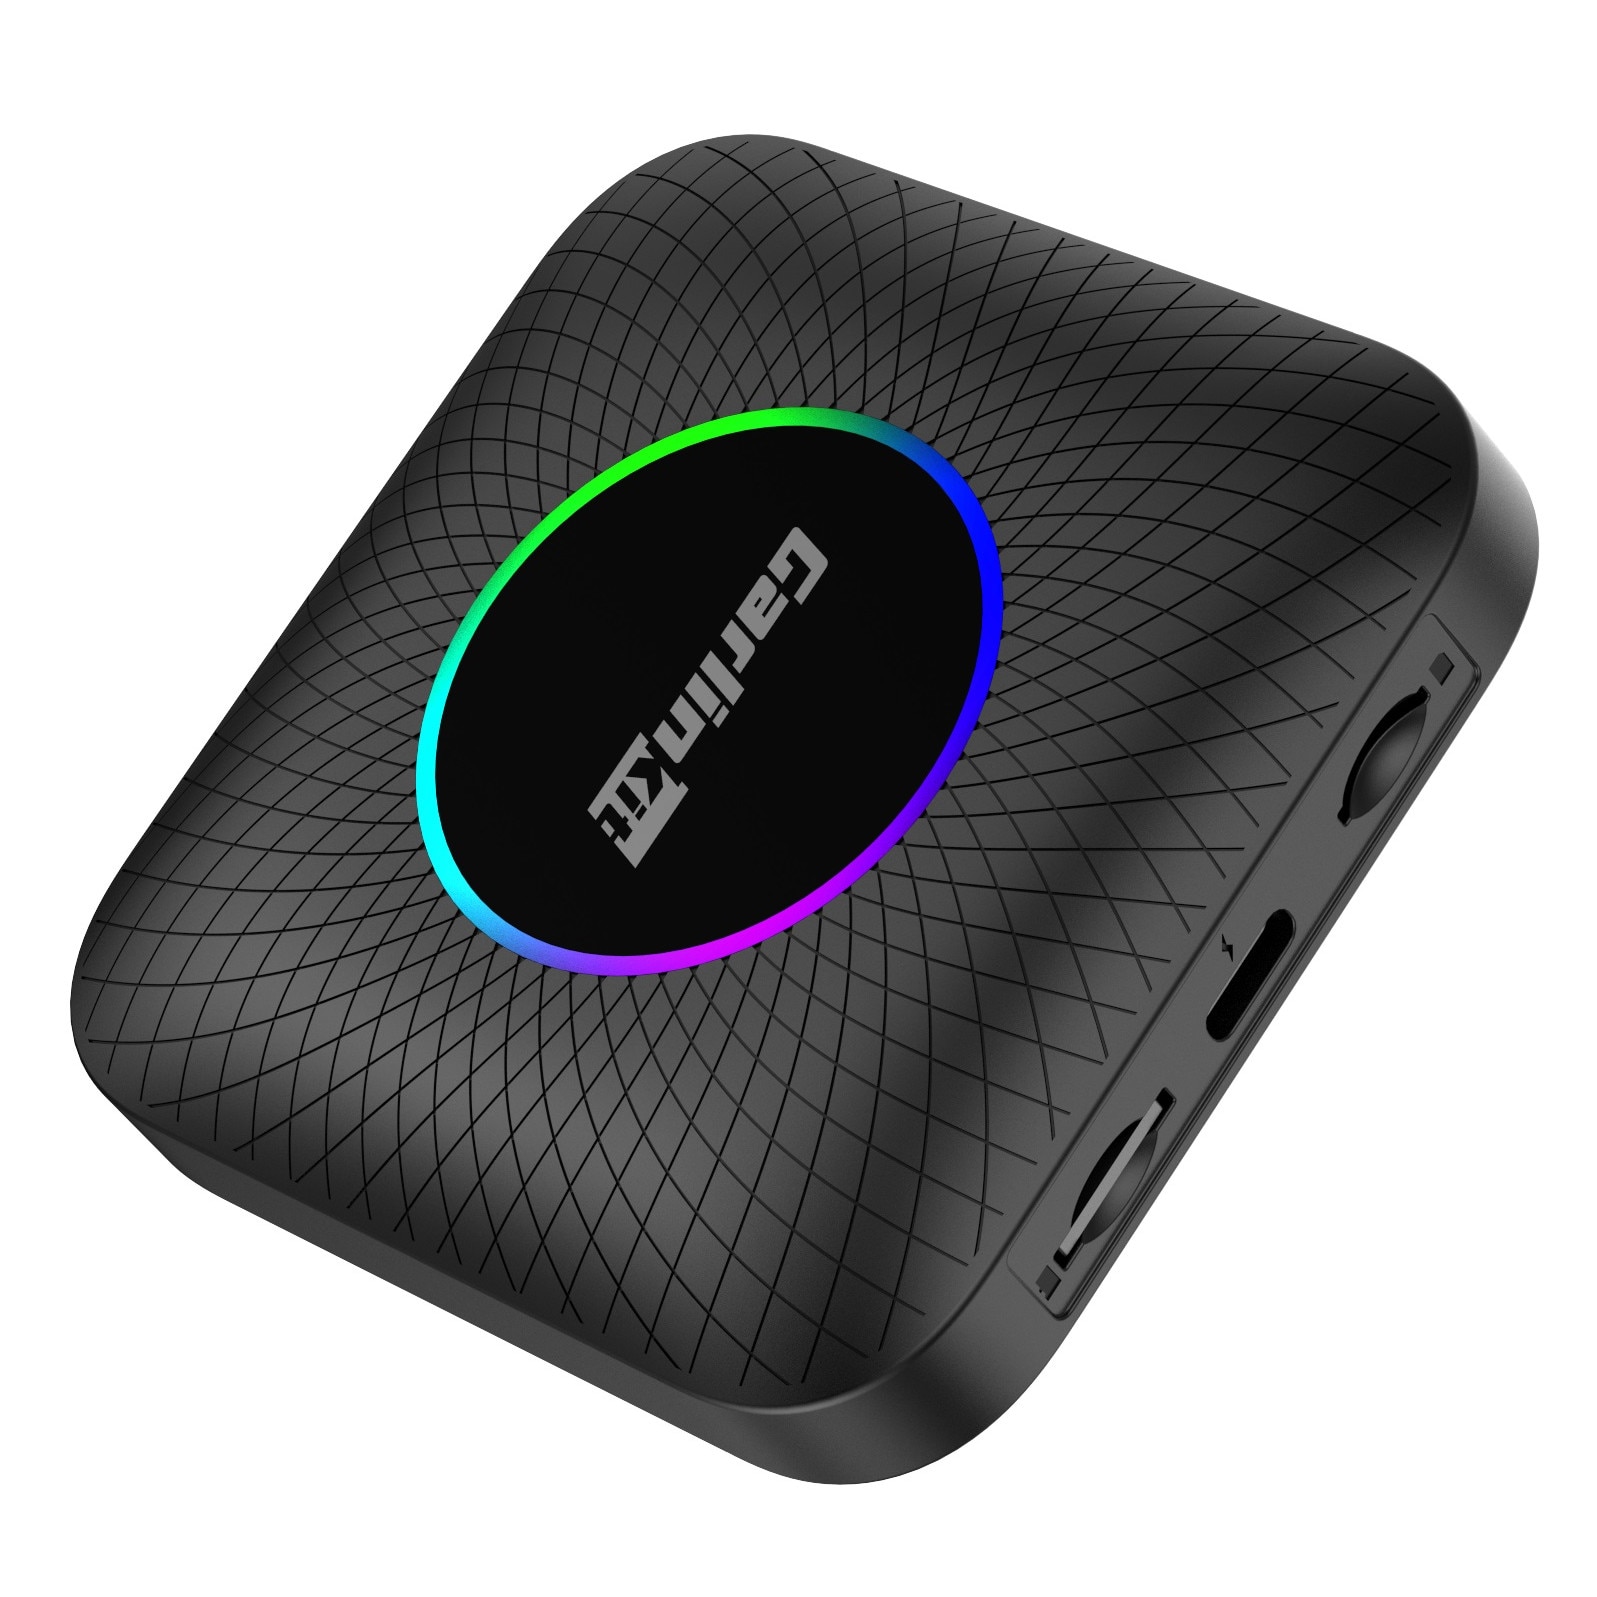 Tbox LED - Carlinkit Android 13.0 AI Box - Wireless Carplay